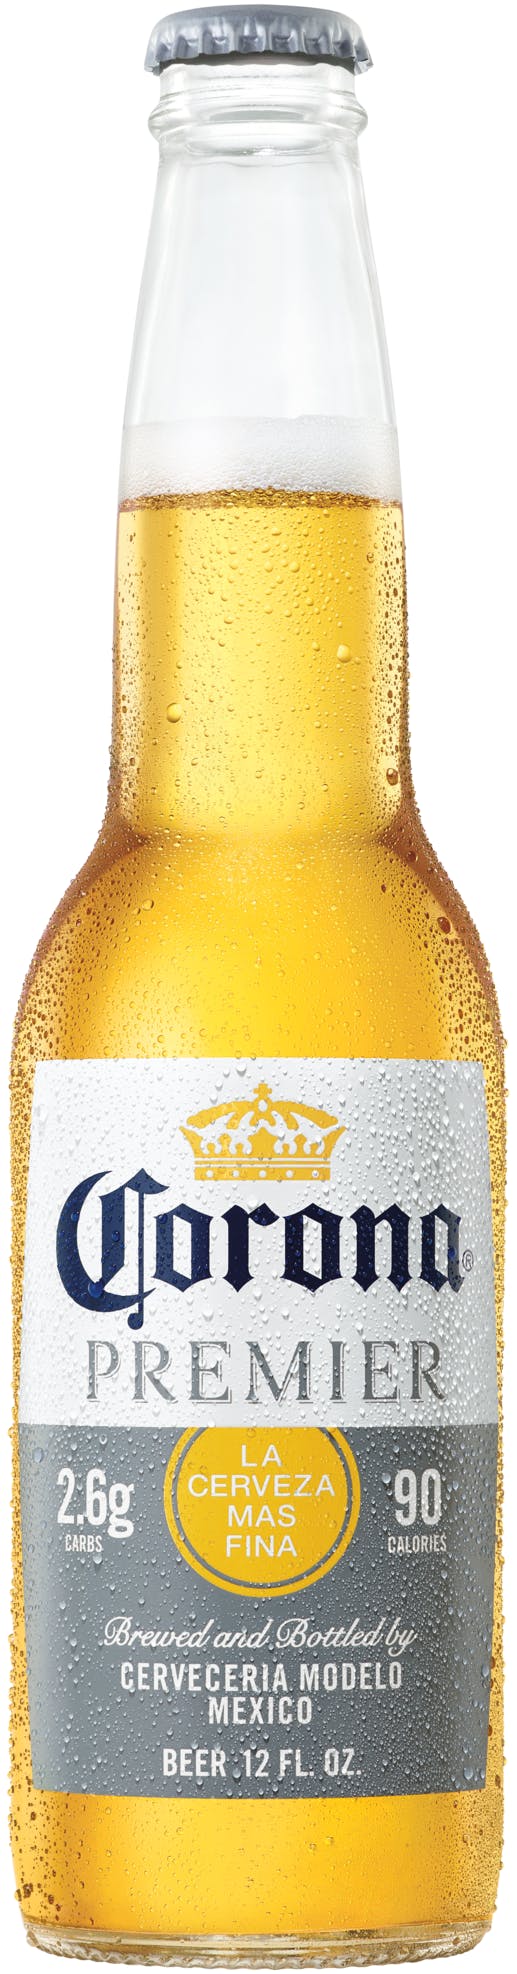 corona premier vs corona extra alcohol content